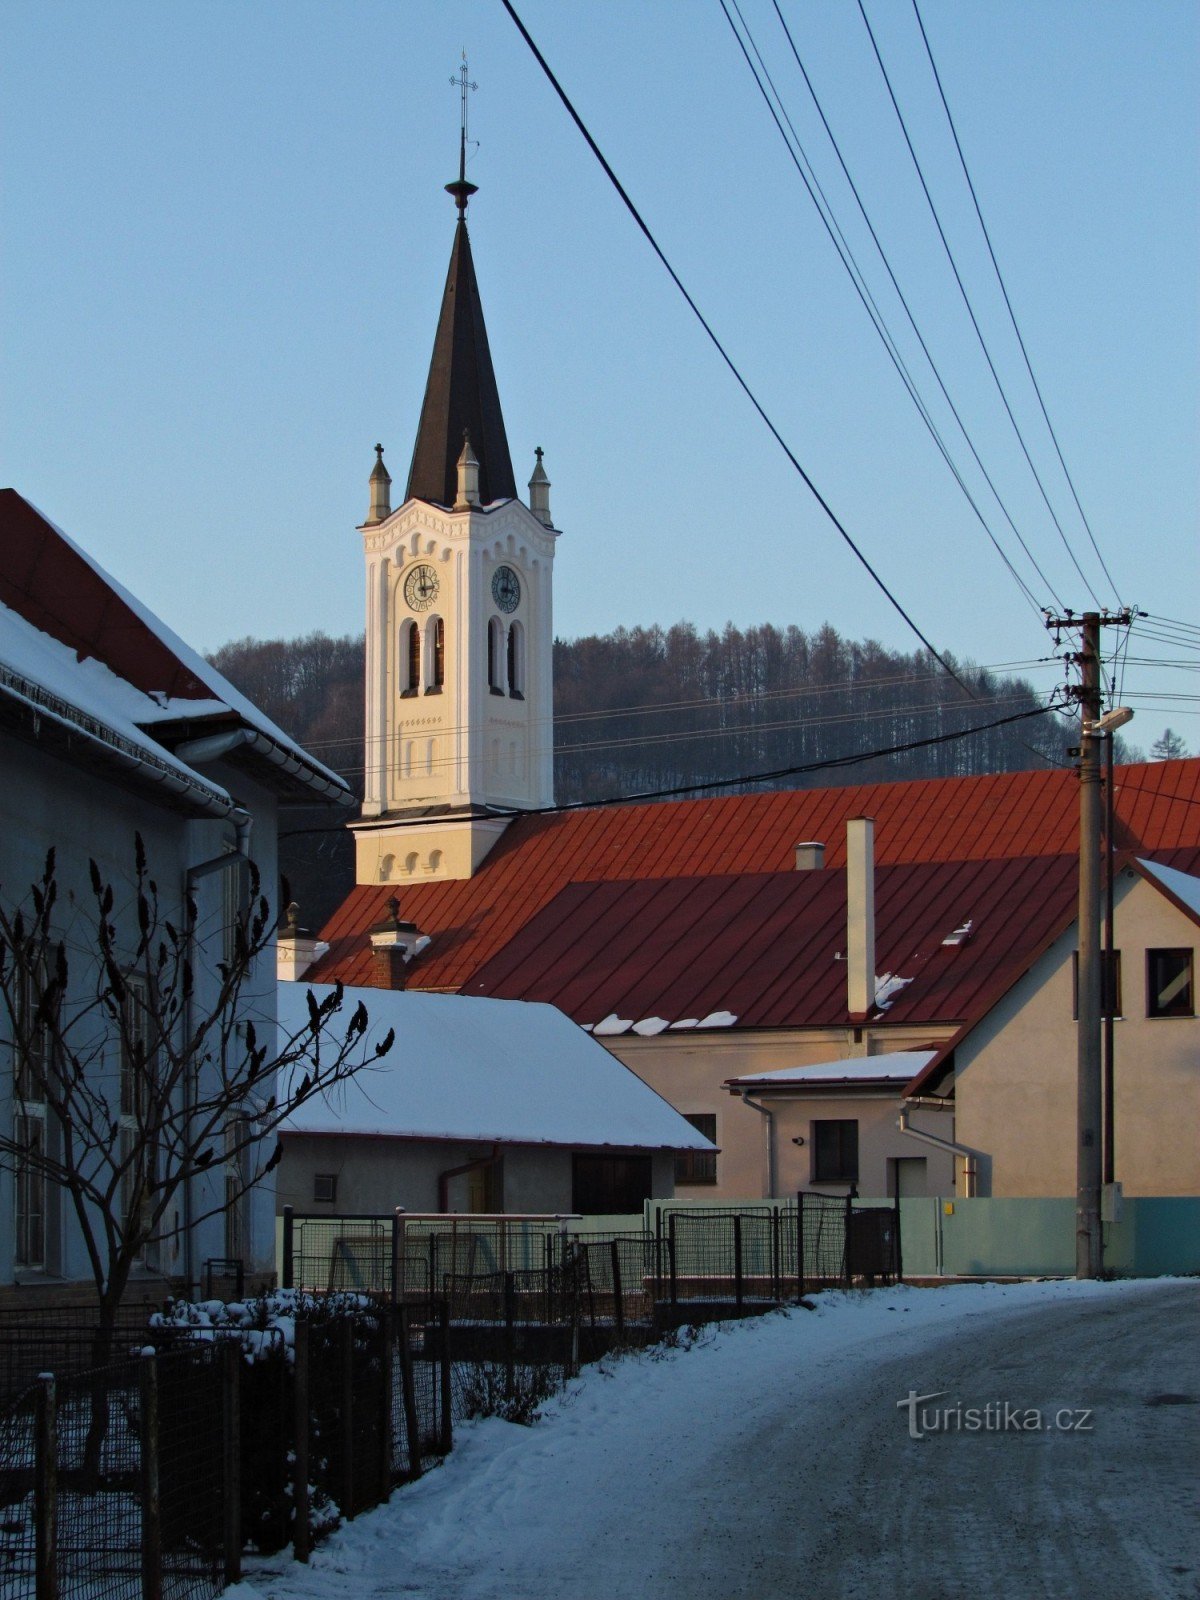 Jasenná - église évangélique